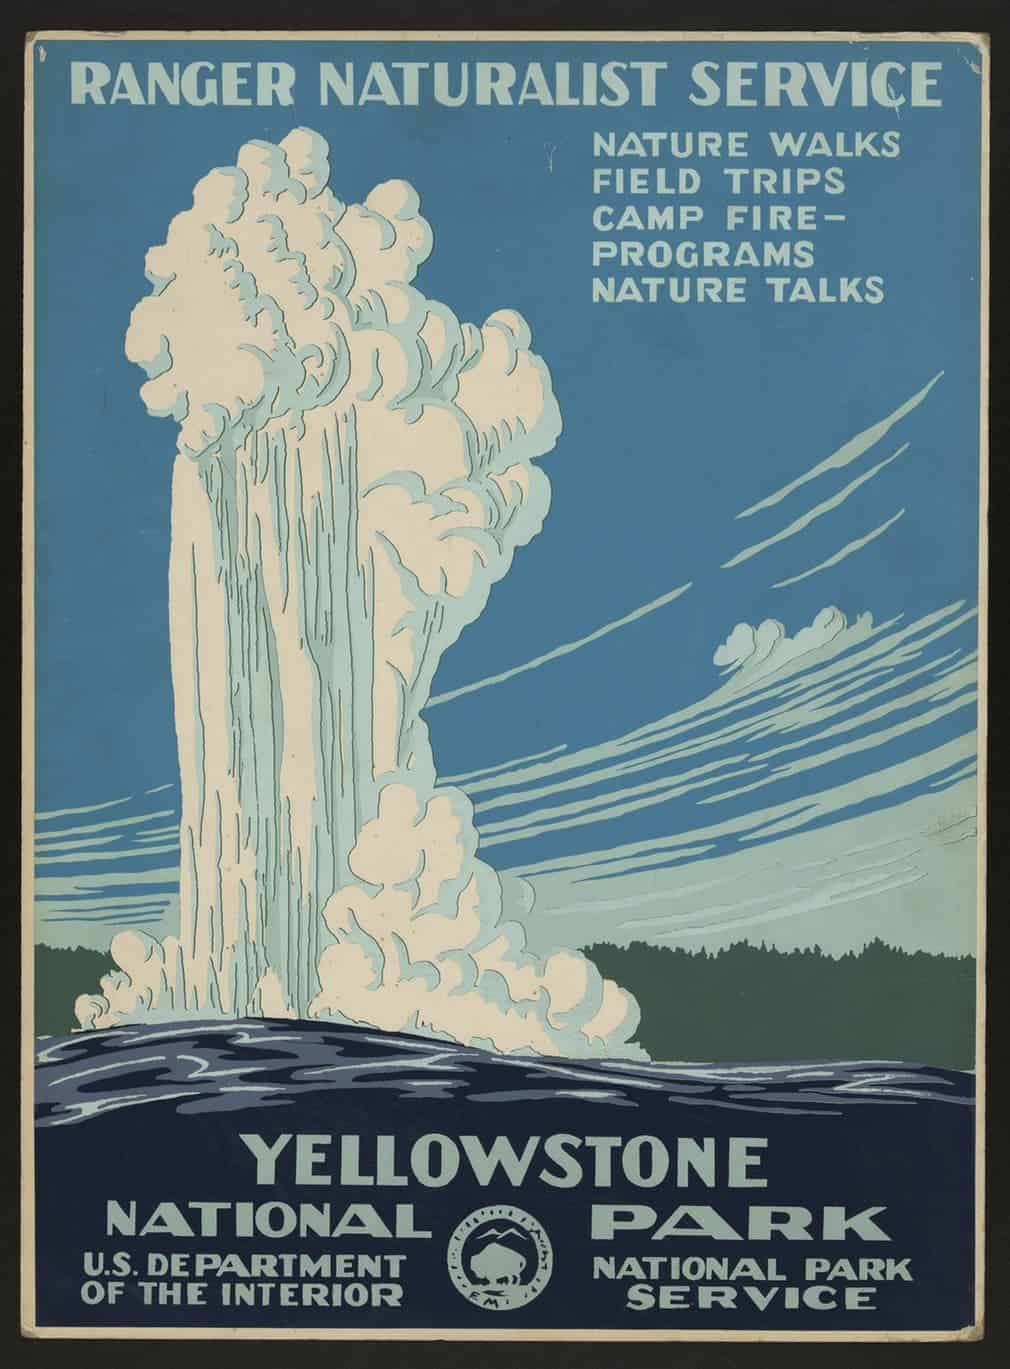 Old Faithful erupting at Yellowstone national park, circa 1938